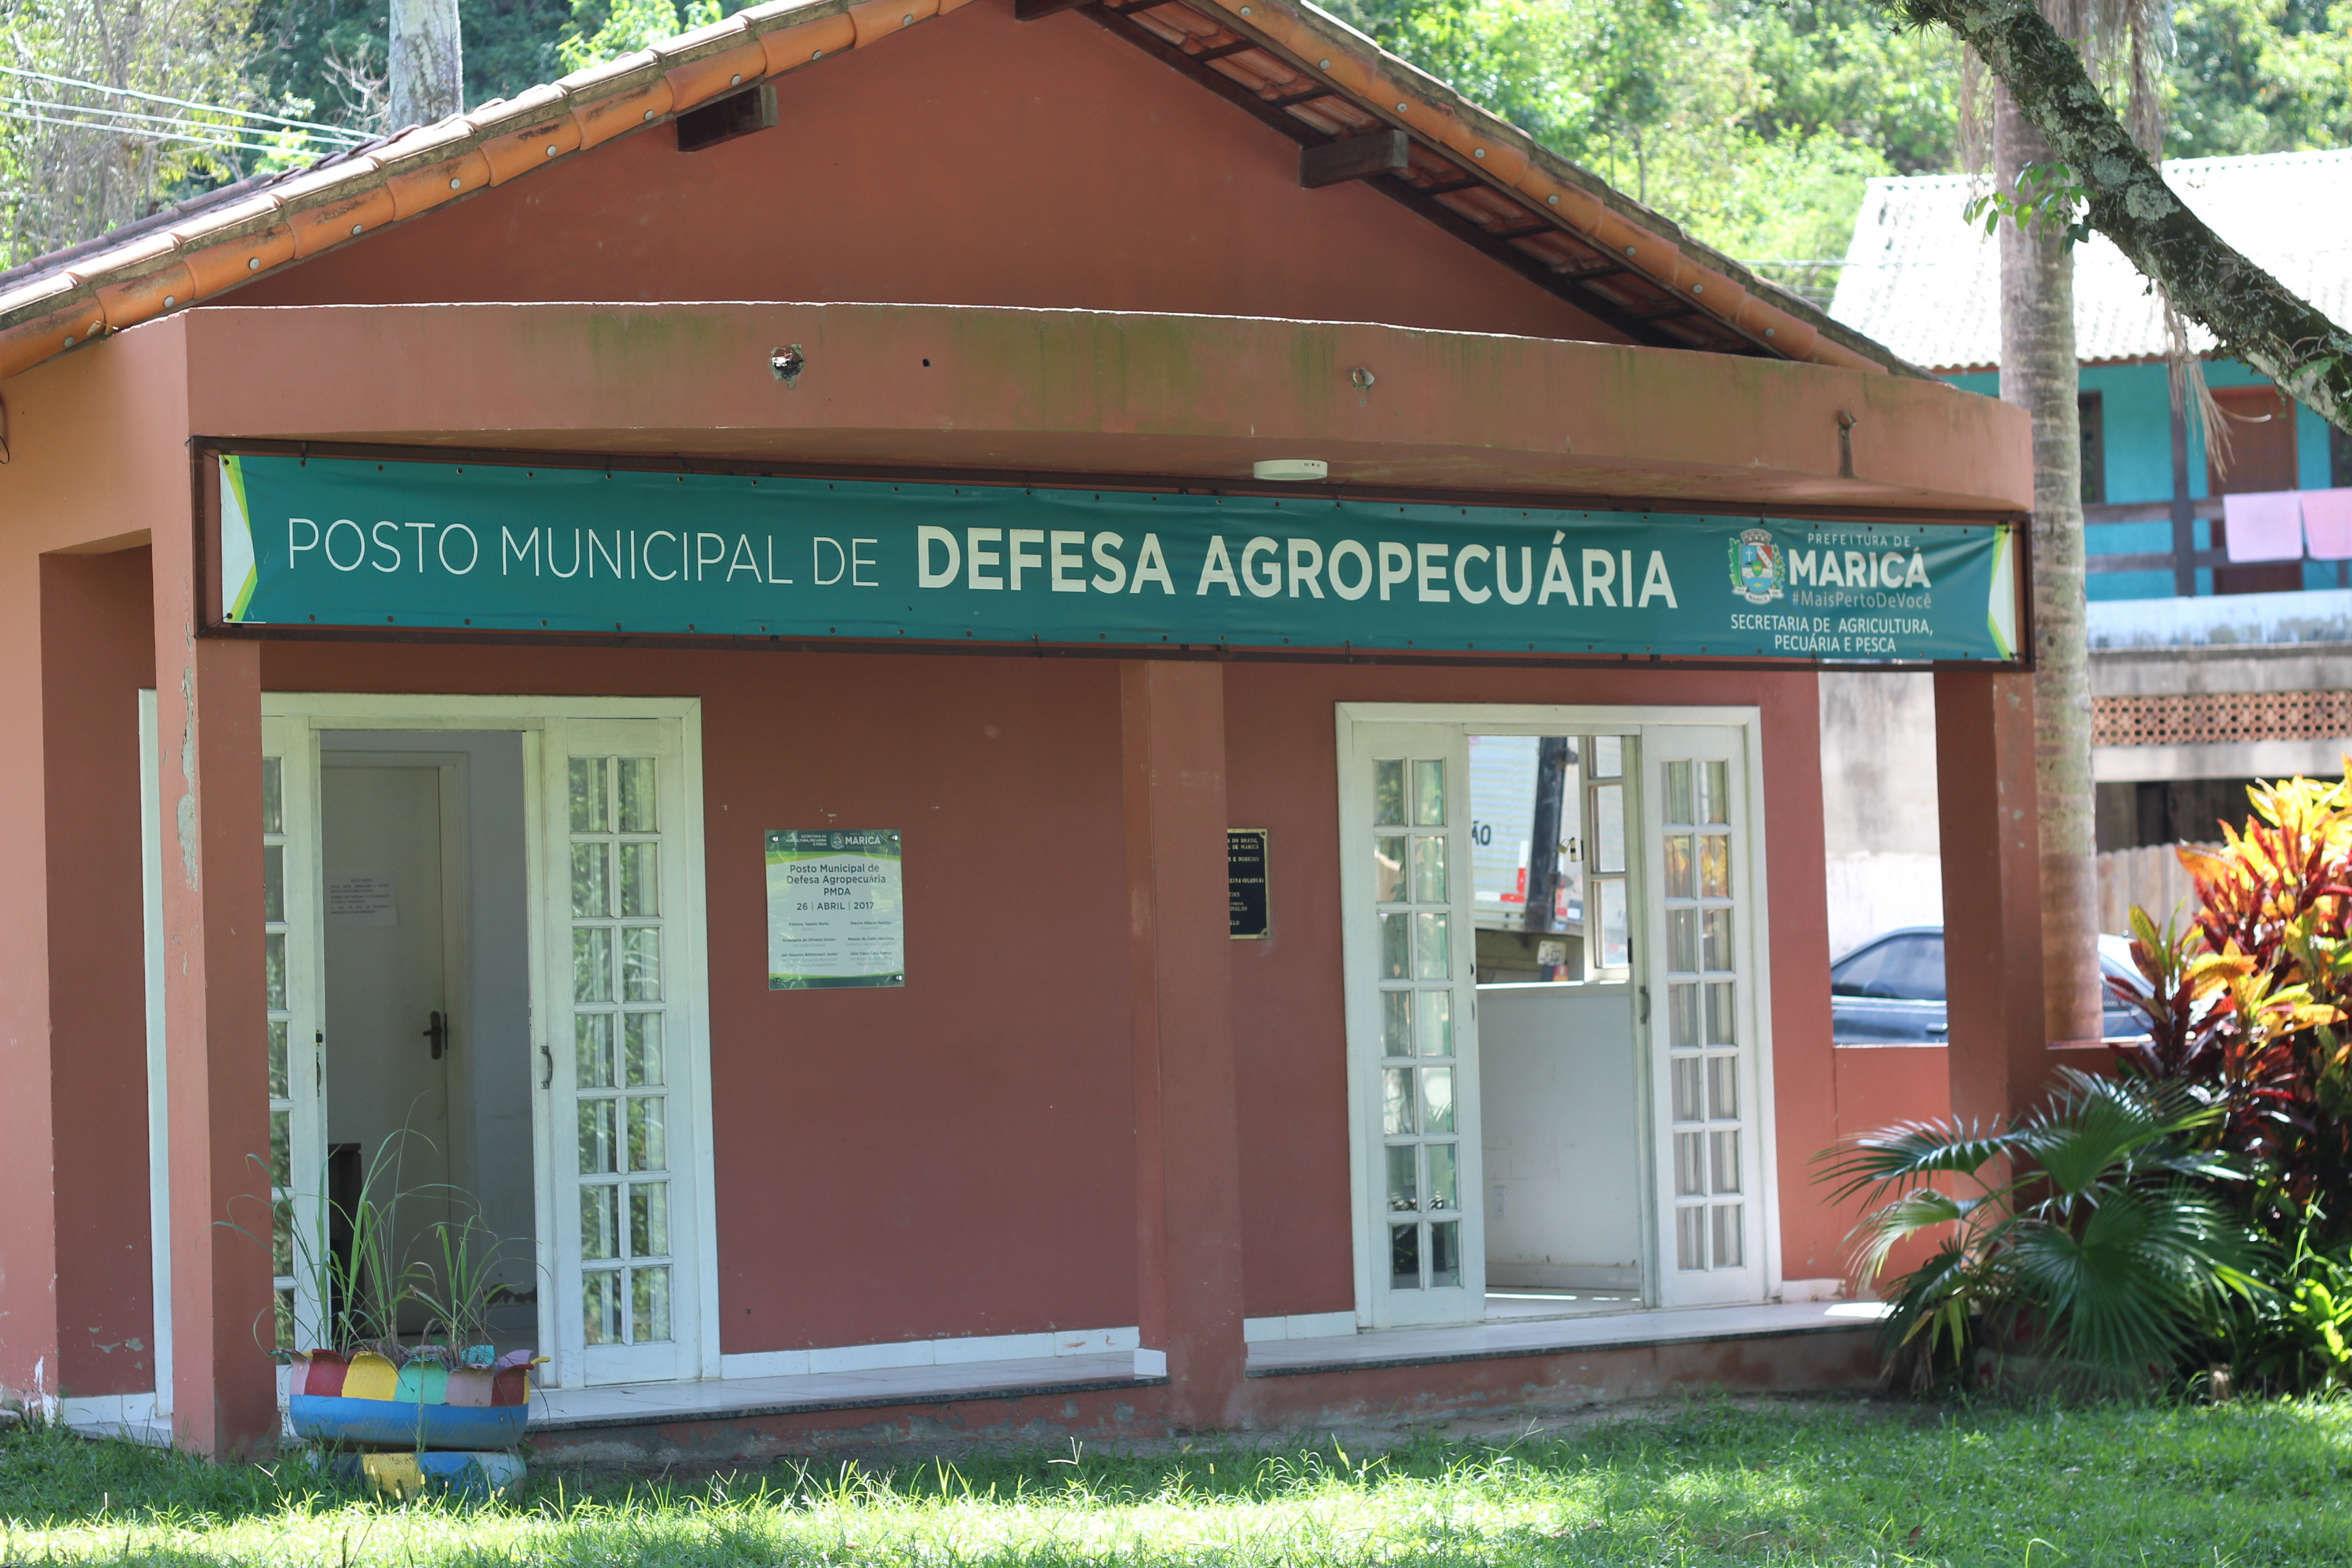 Posto Municipal de Defesa Agropecuária PMDA